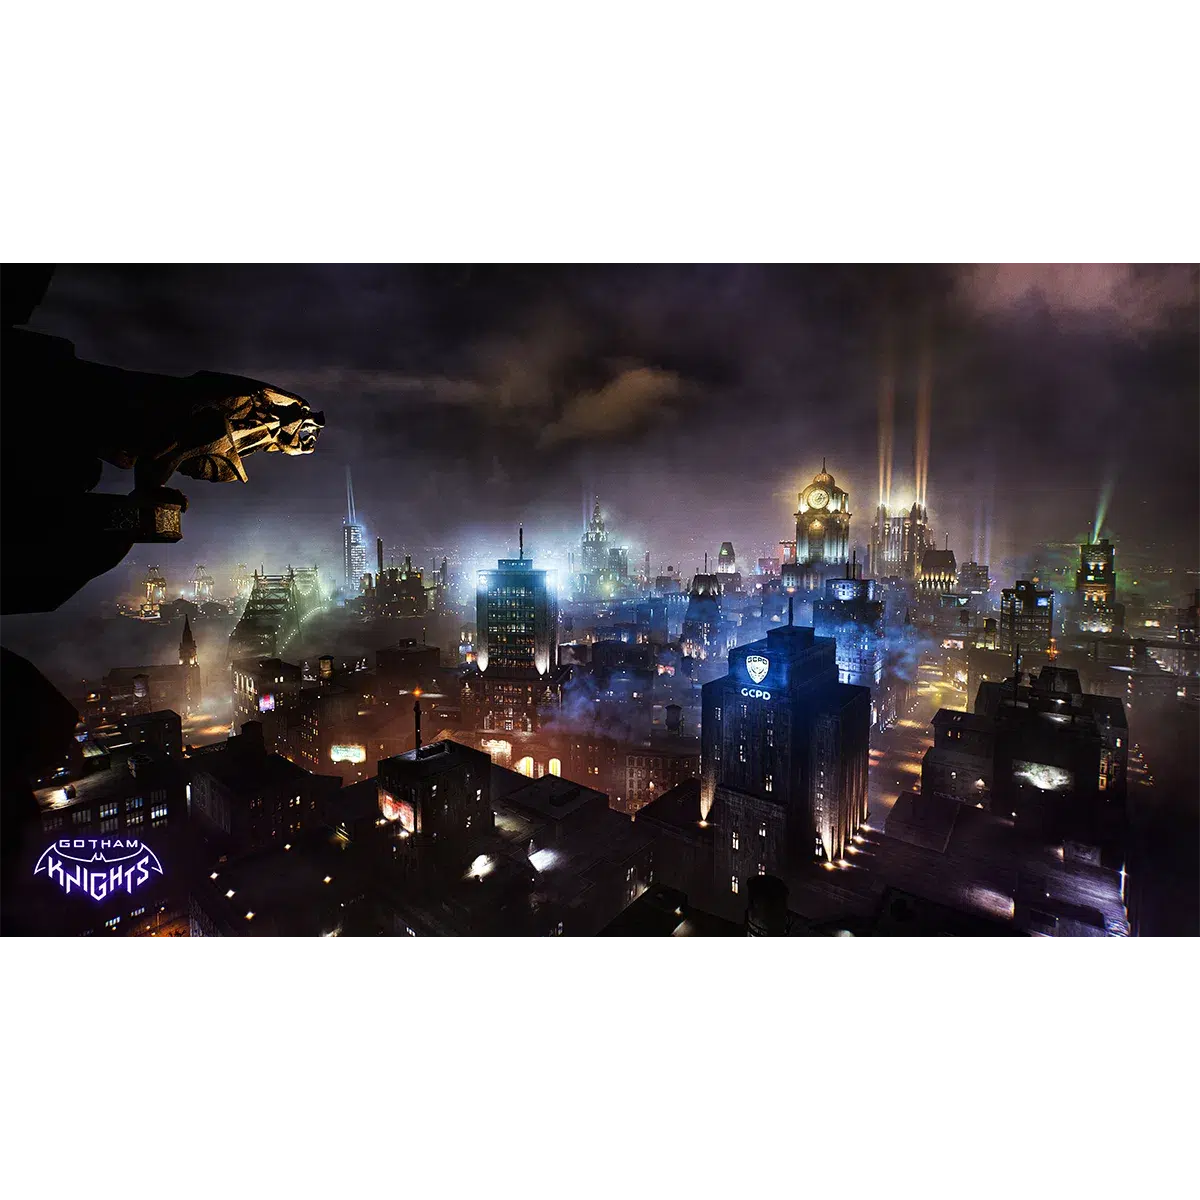 Gotham Knights (Xbox Series X) Image 4